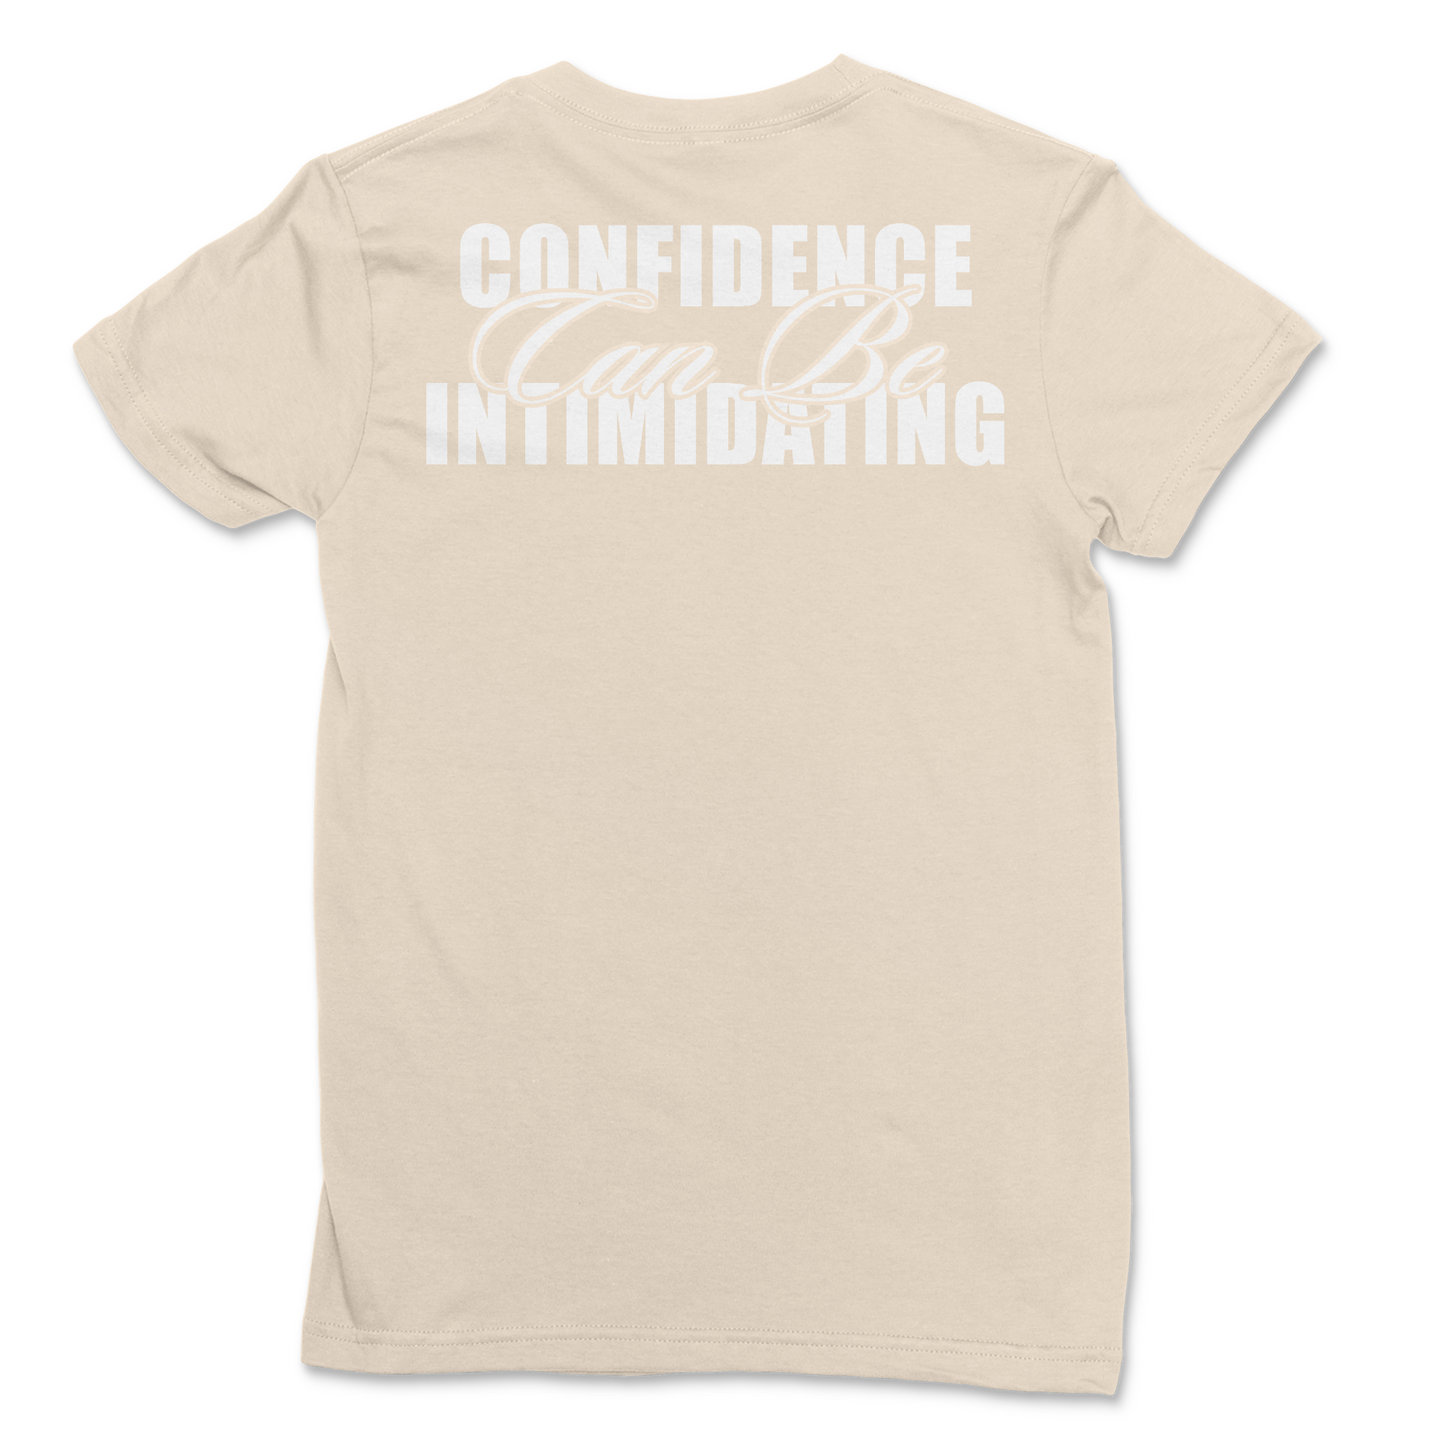 Women's "Confidence" T-Shirt